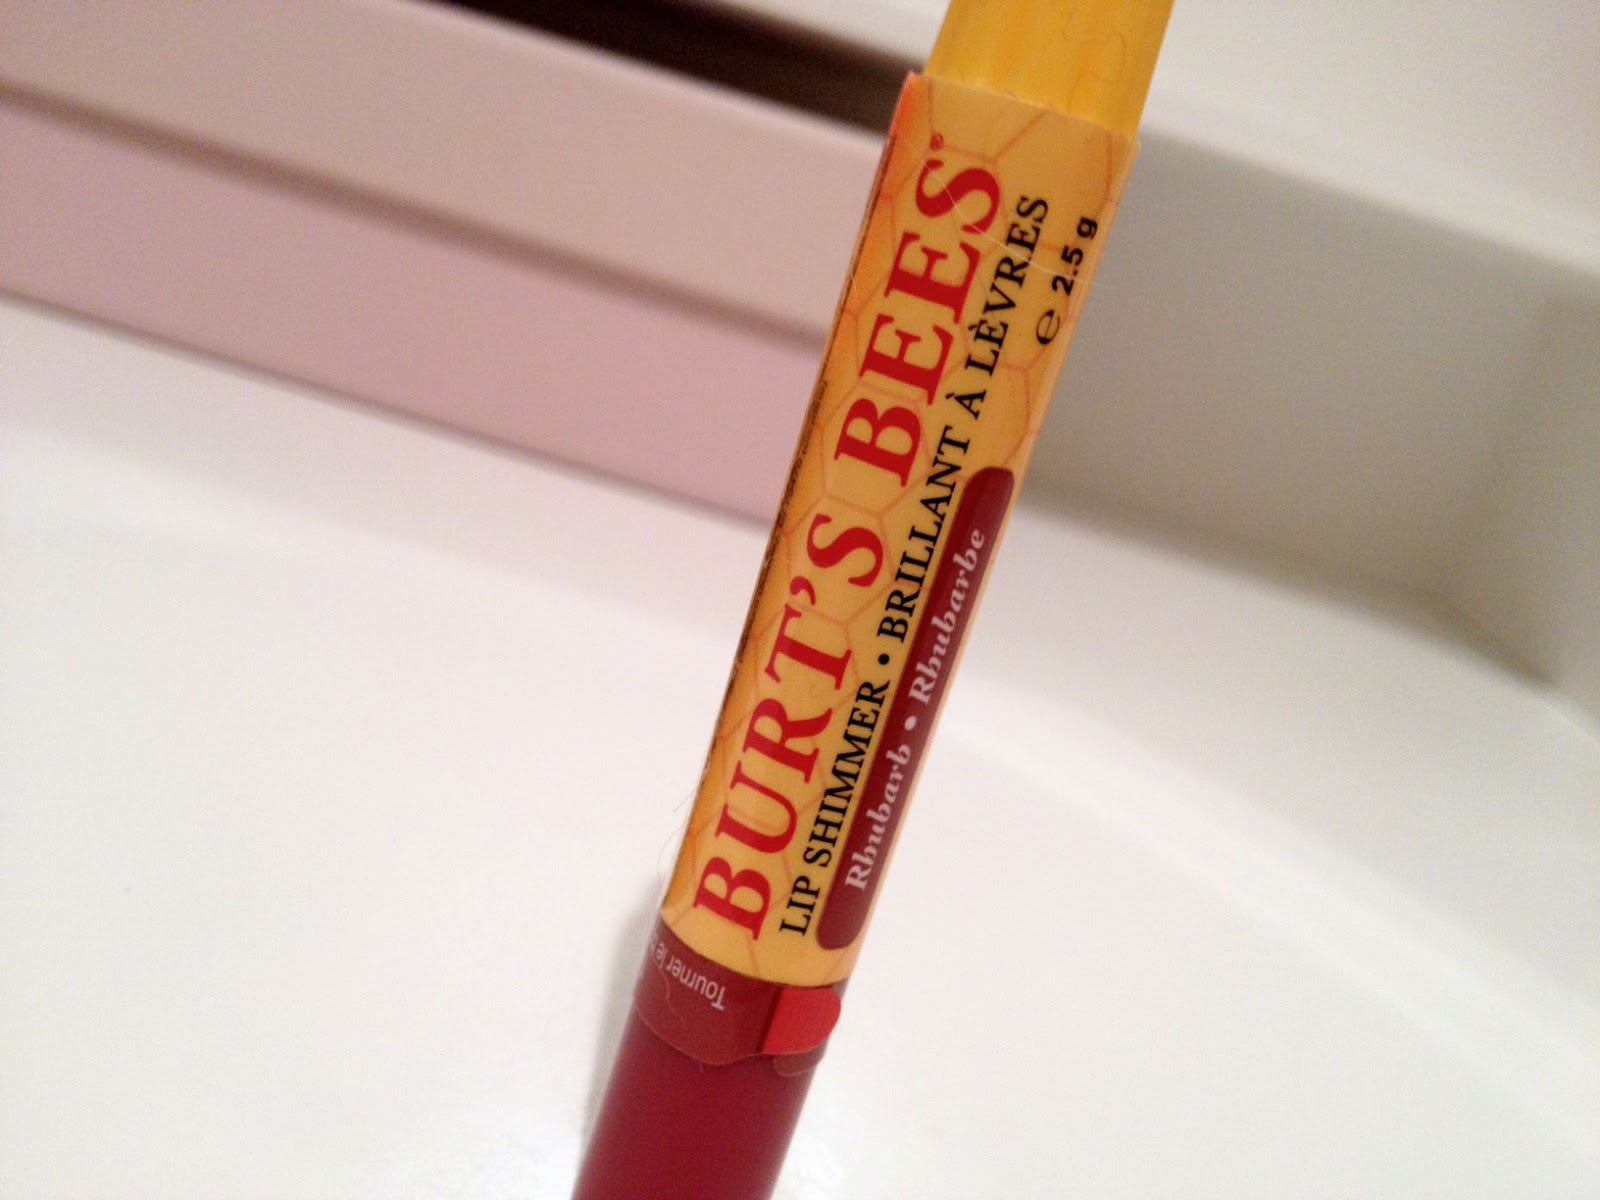 Burt's Bees Lip Shimmer. | Dalry Rose Blog